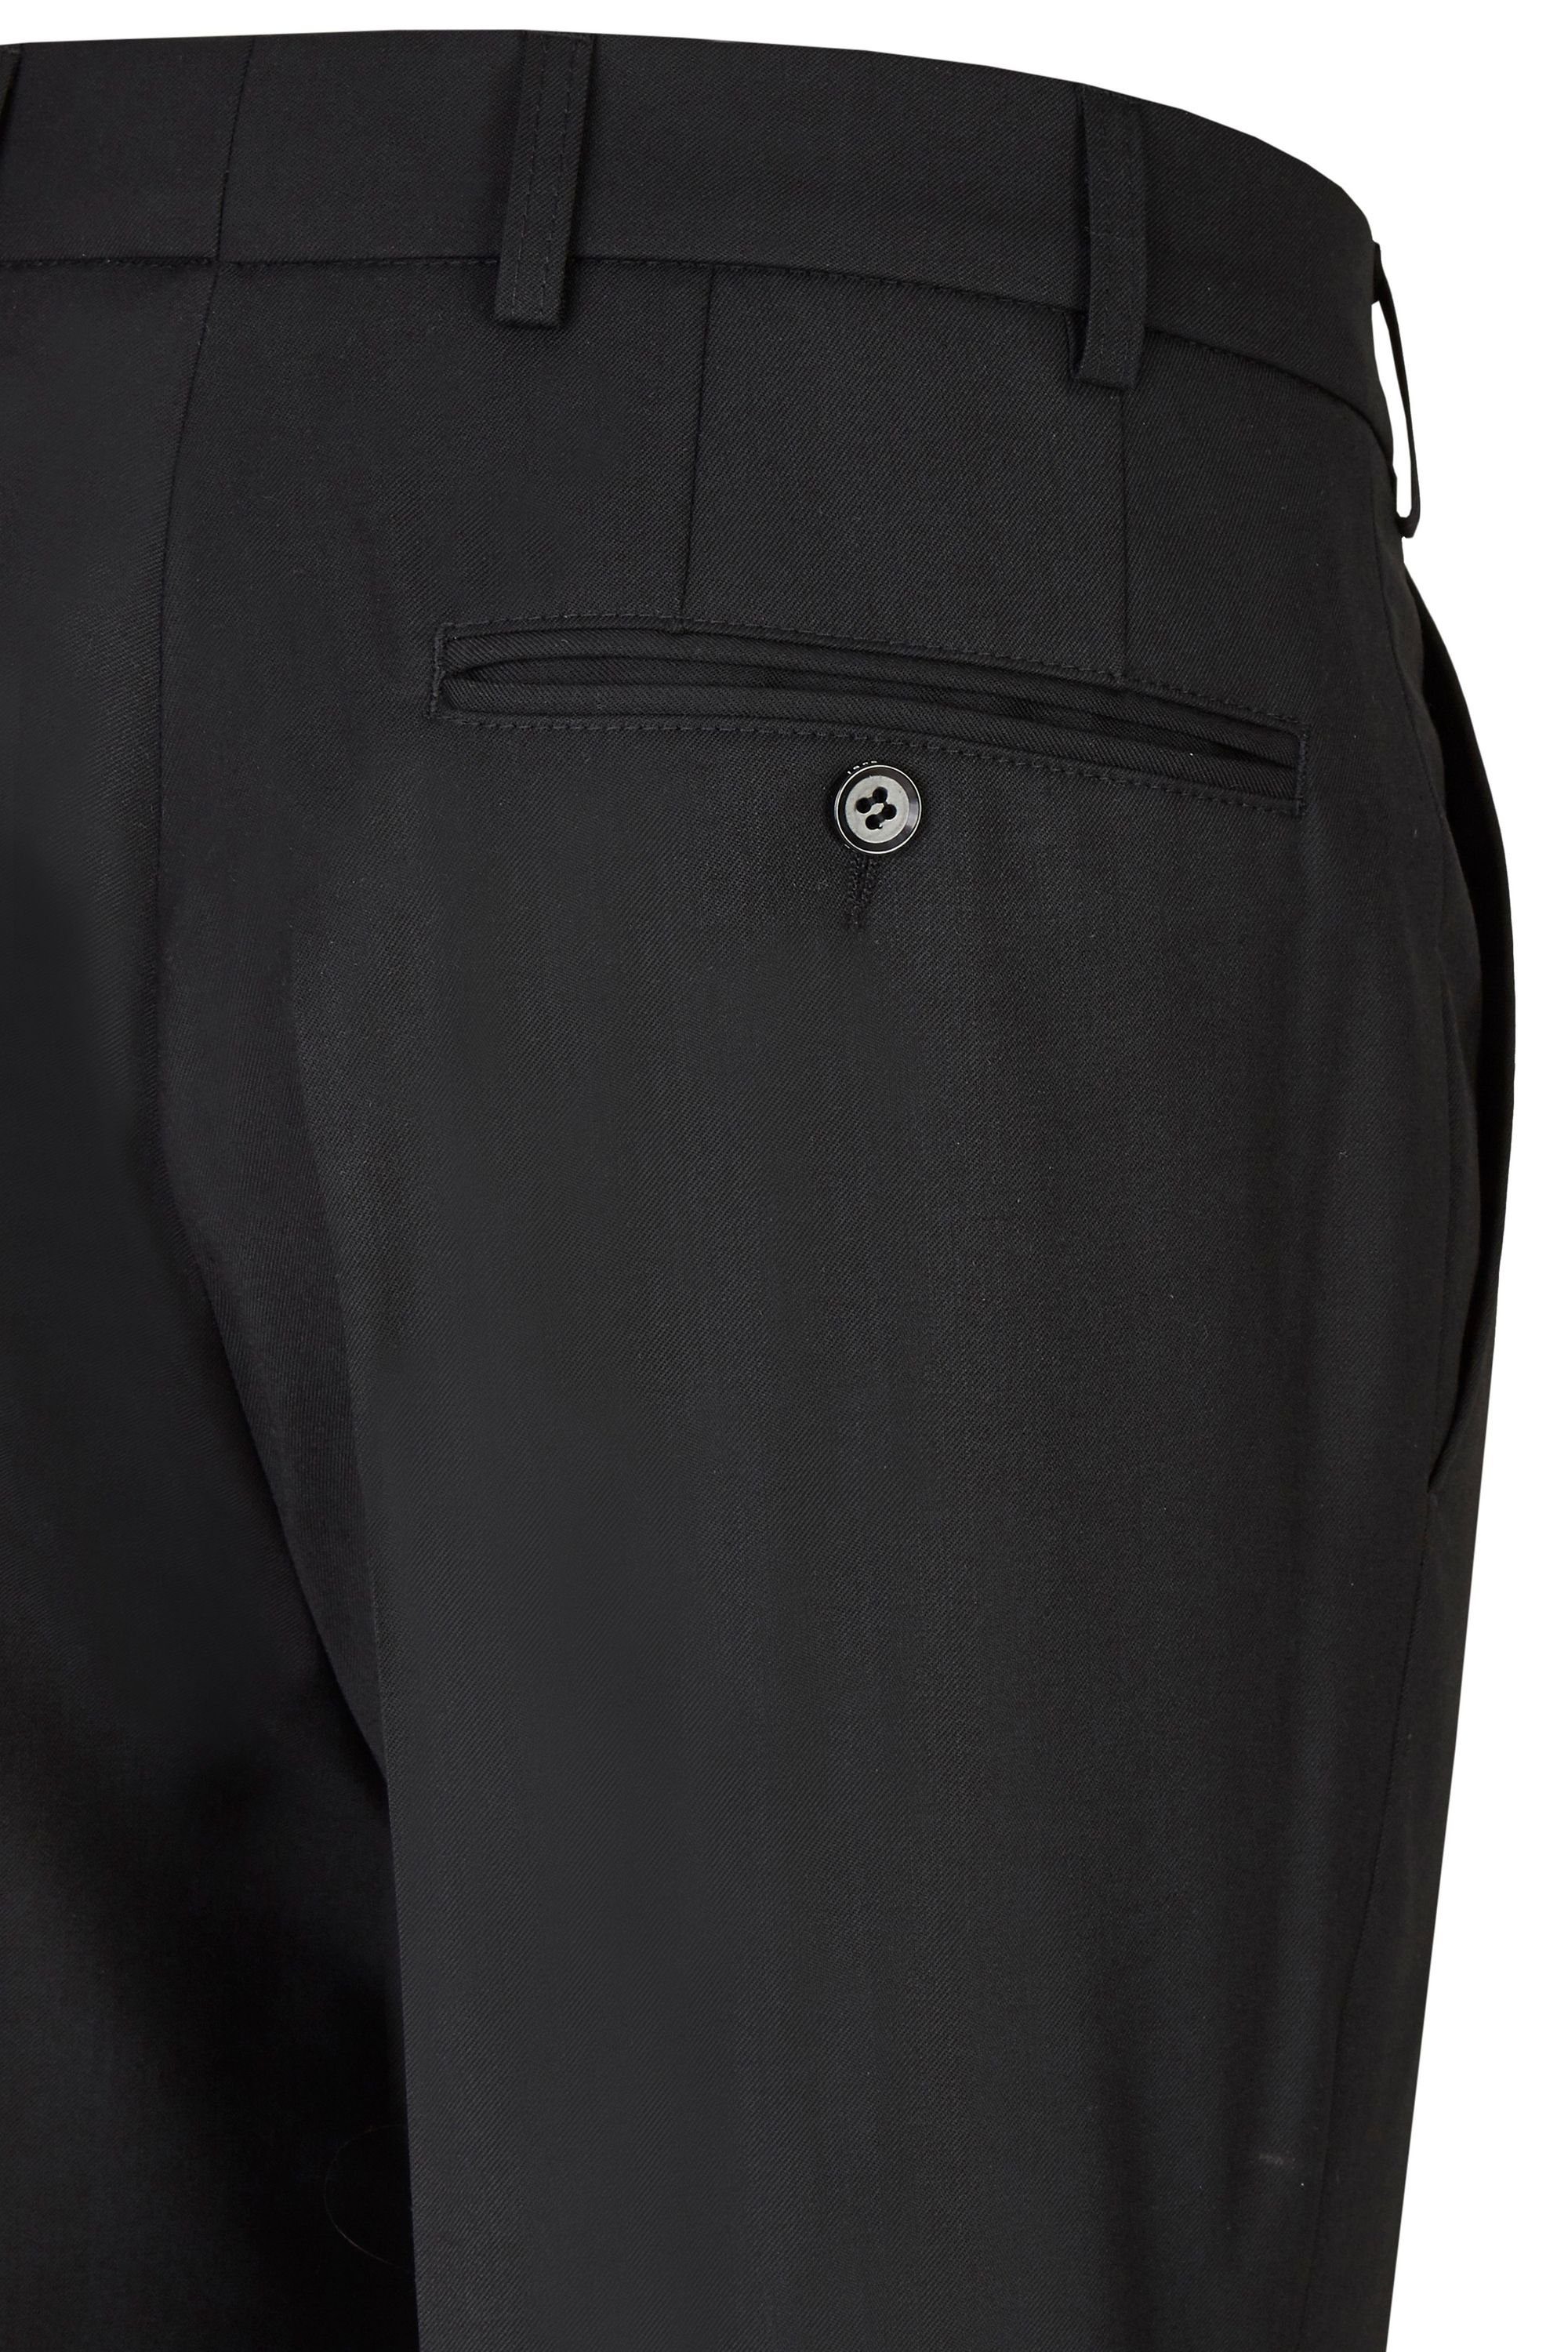 aubi: Stoffhose aubi schwarz Anzughose Businesshose Fit Perfect (50) Modell Flat Front 26 Herren